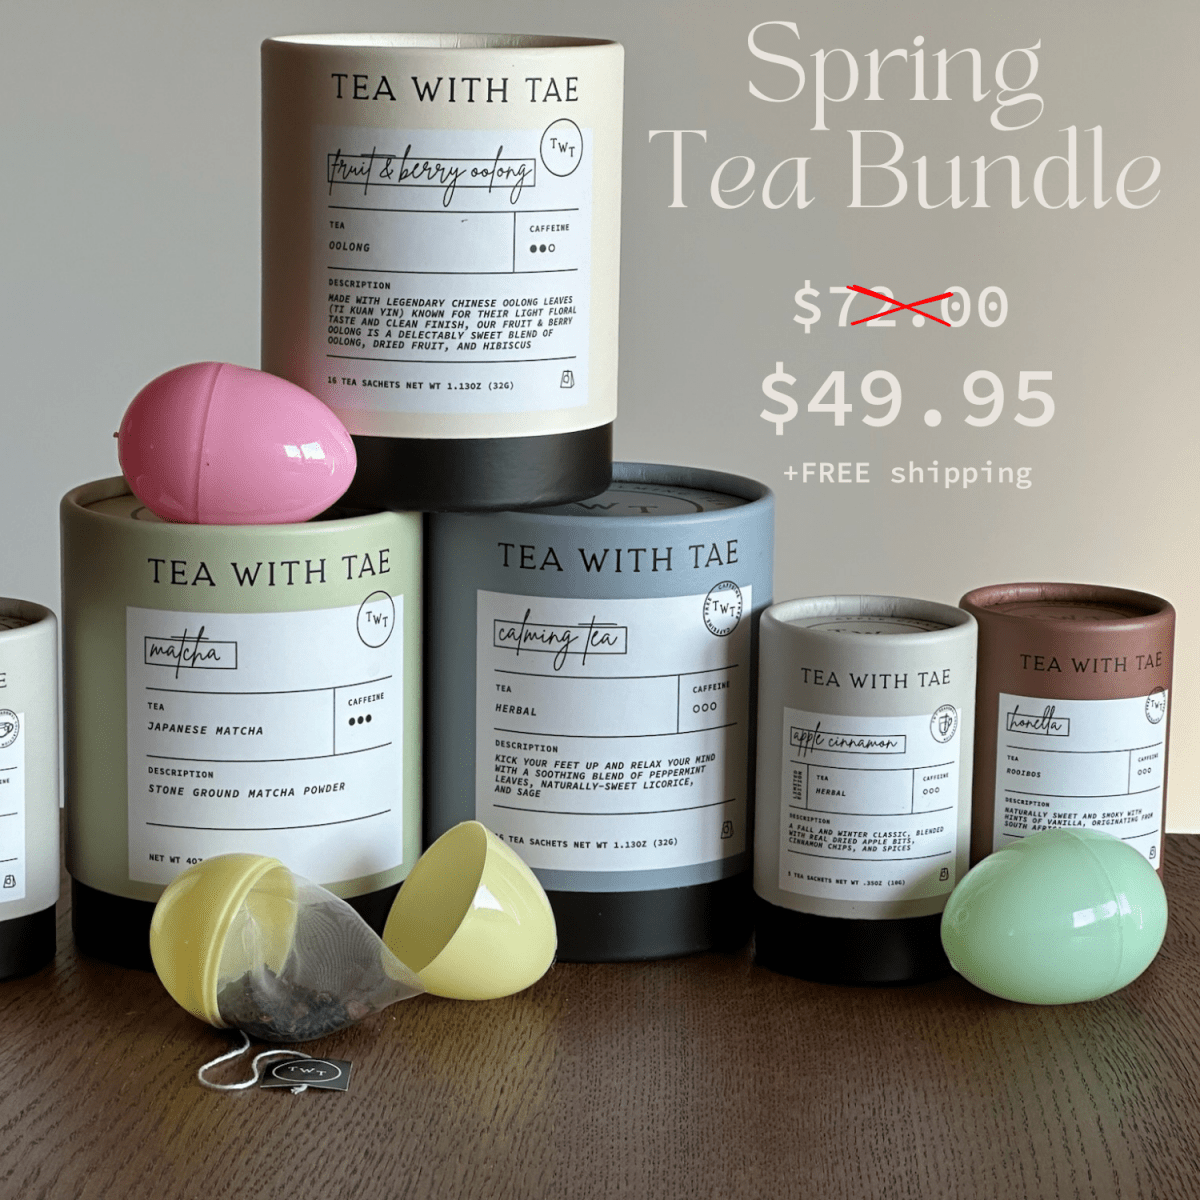 Spring Tea Bundle - Tea with Tae